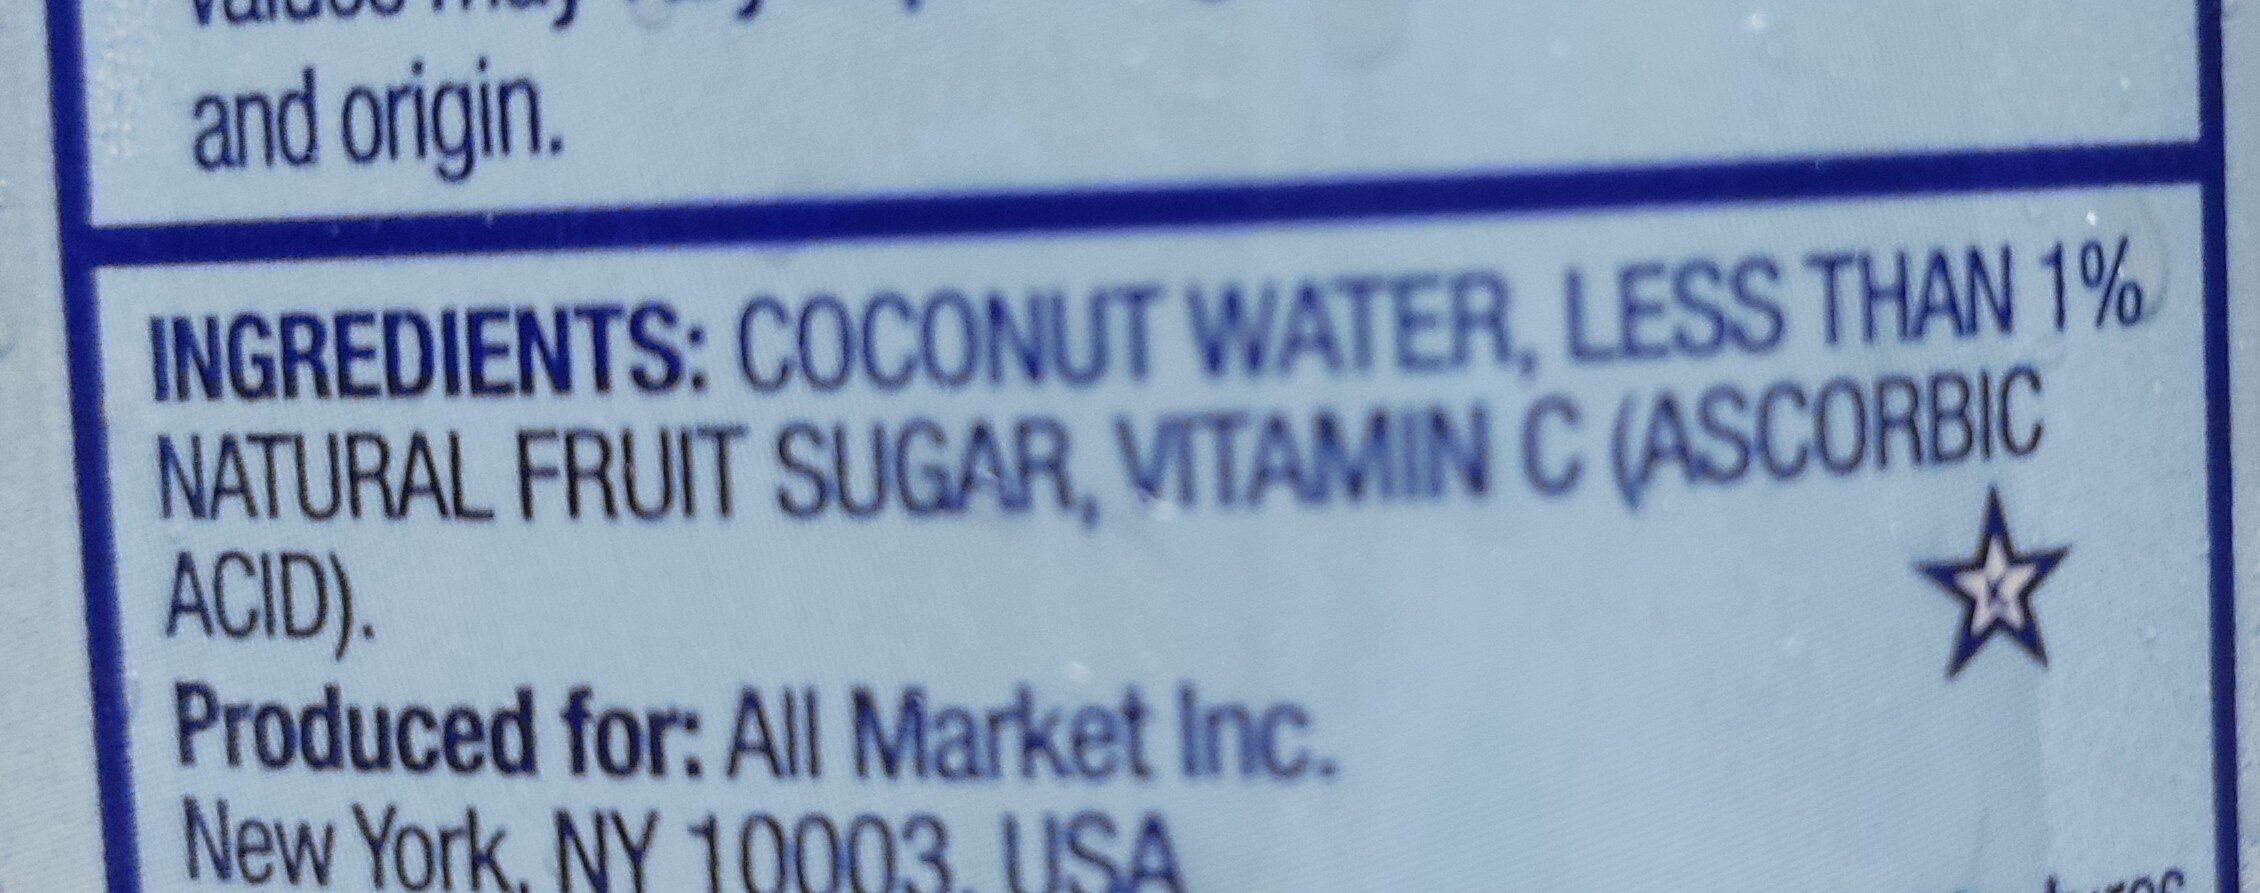 Coconut Water - Ingredients